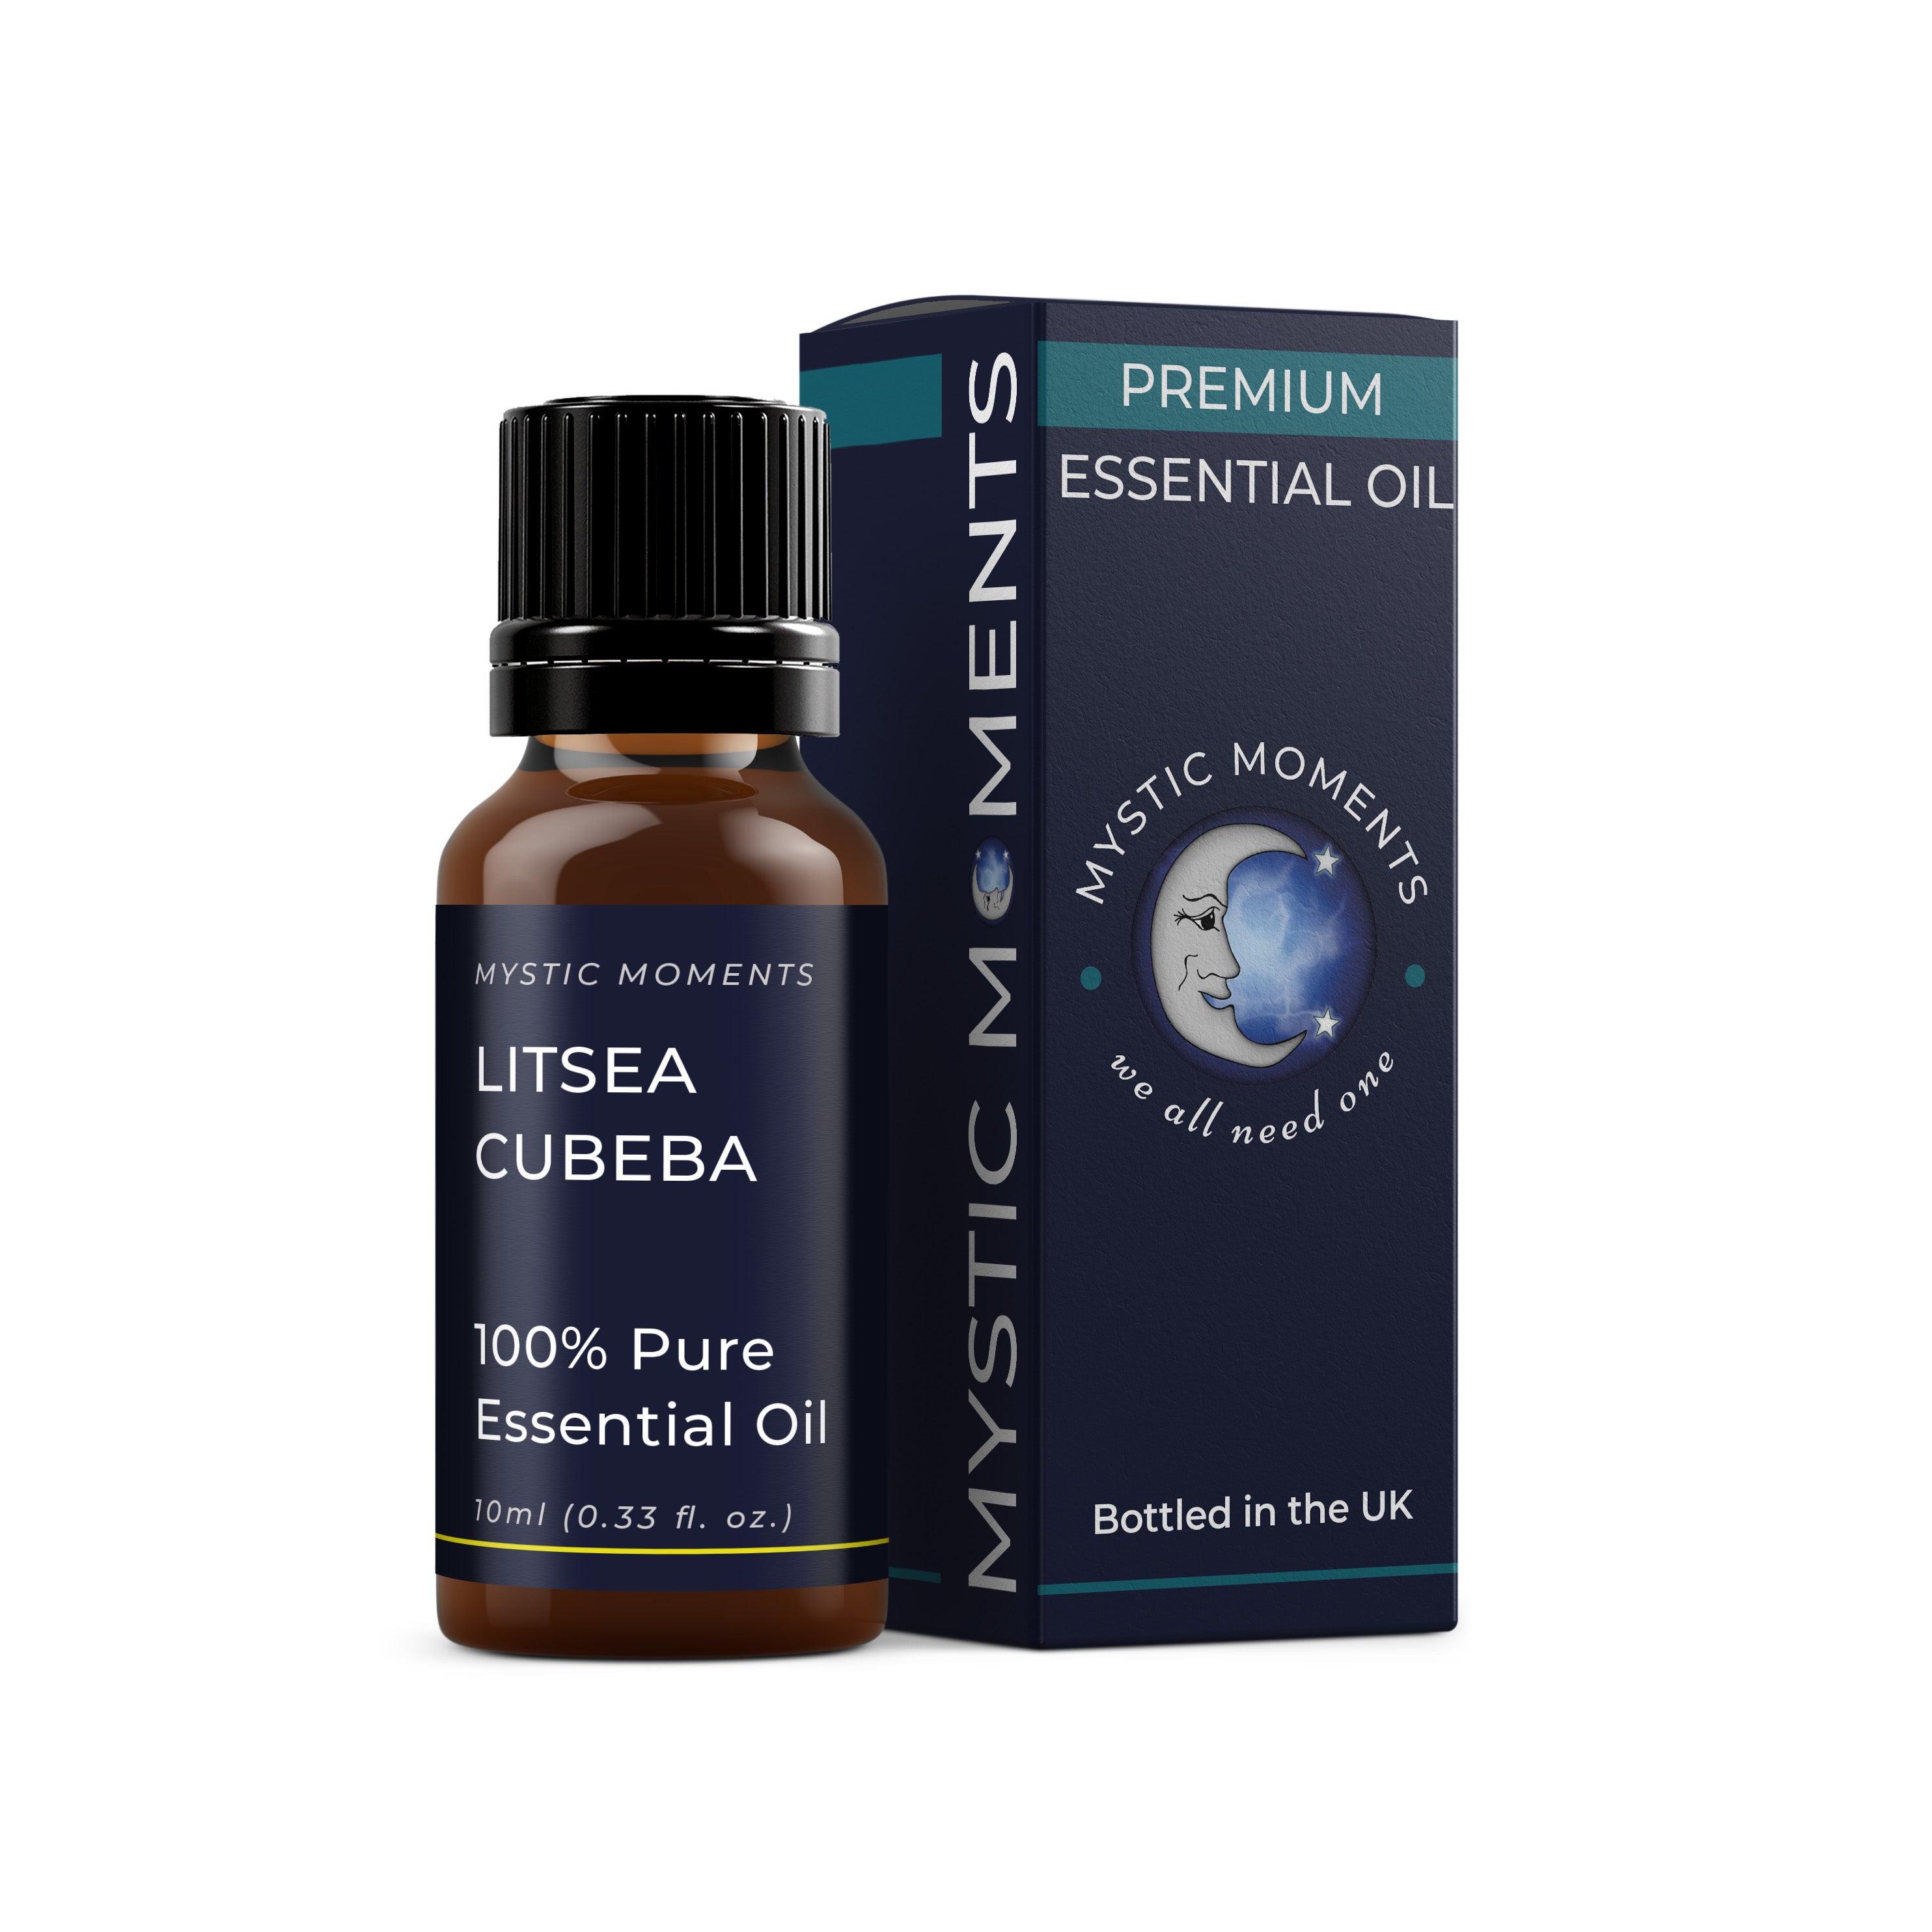 Litsea Cubeba (May Chang) Essential Oil